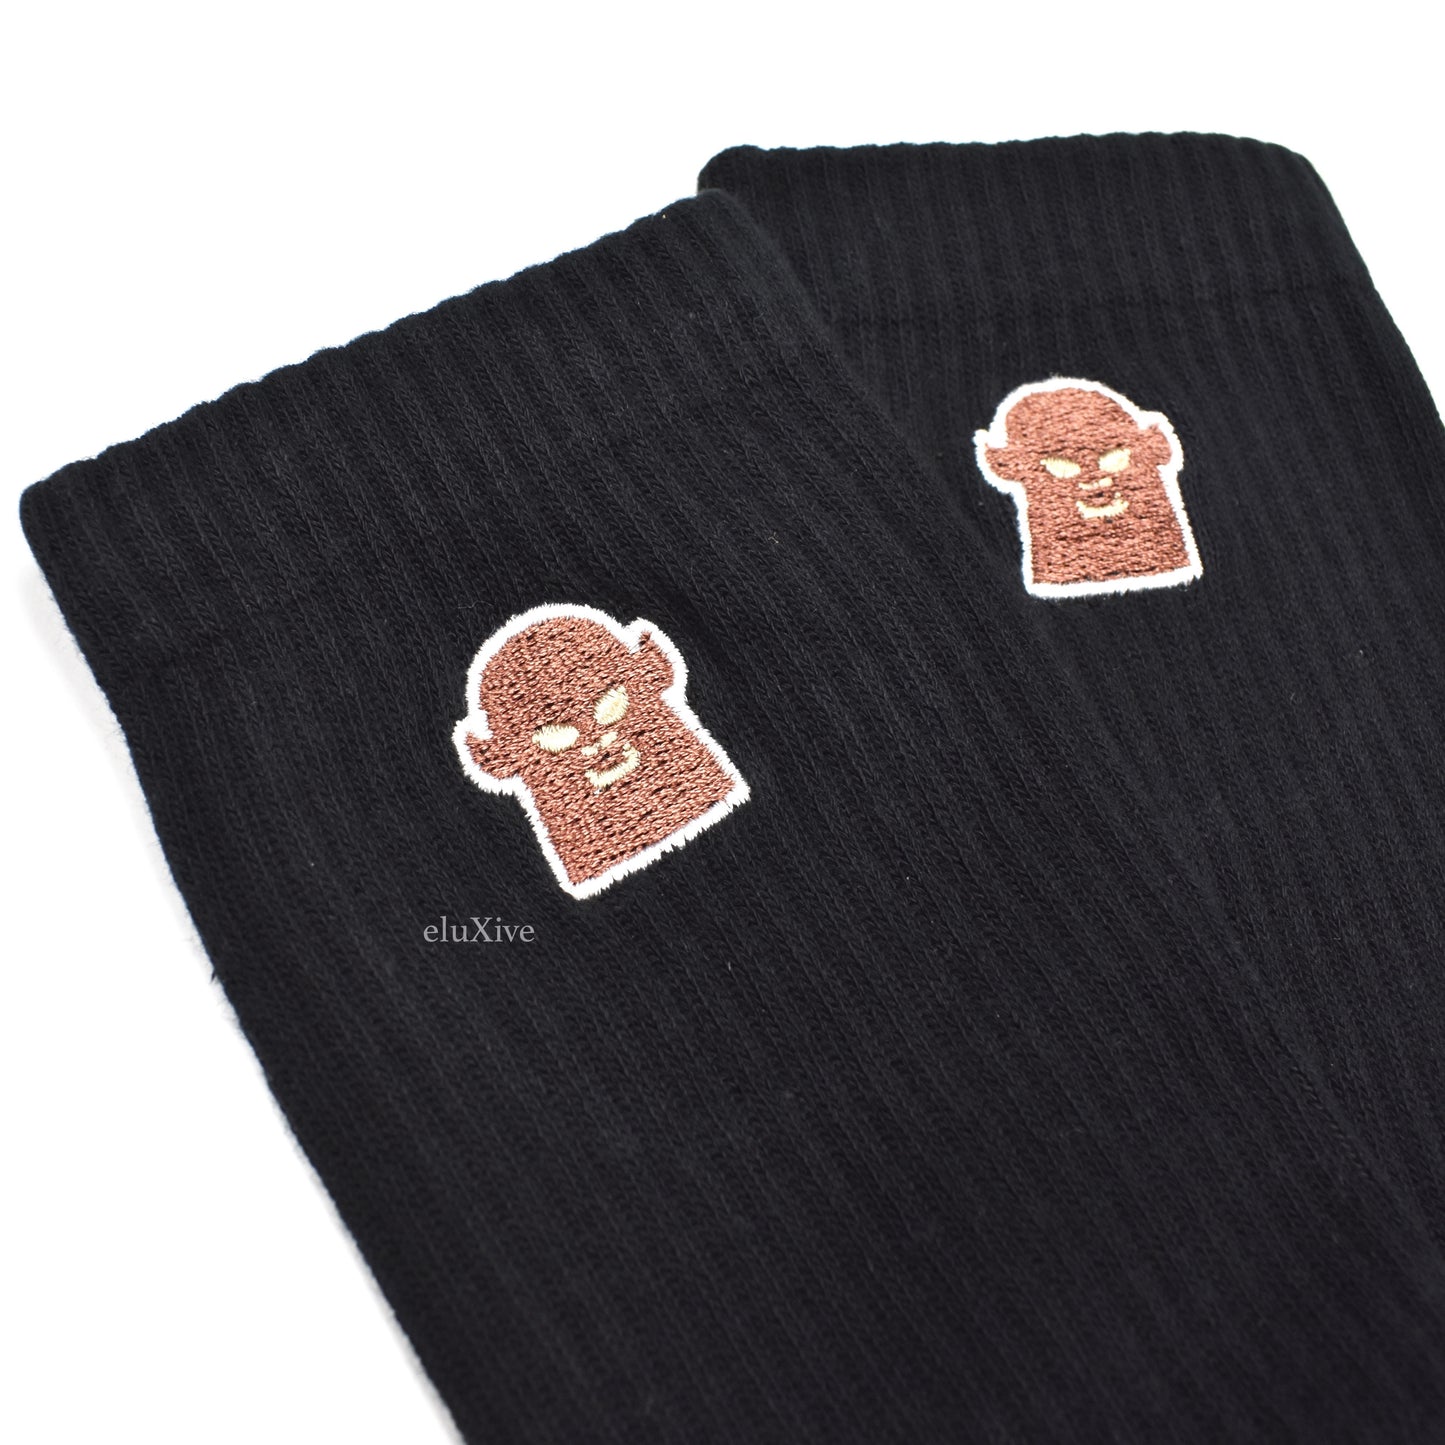 Imran Potato - Gerbil Embroidered Socks (Black)